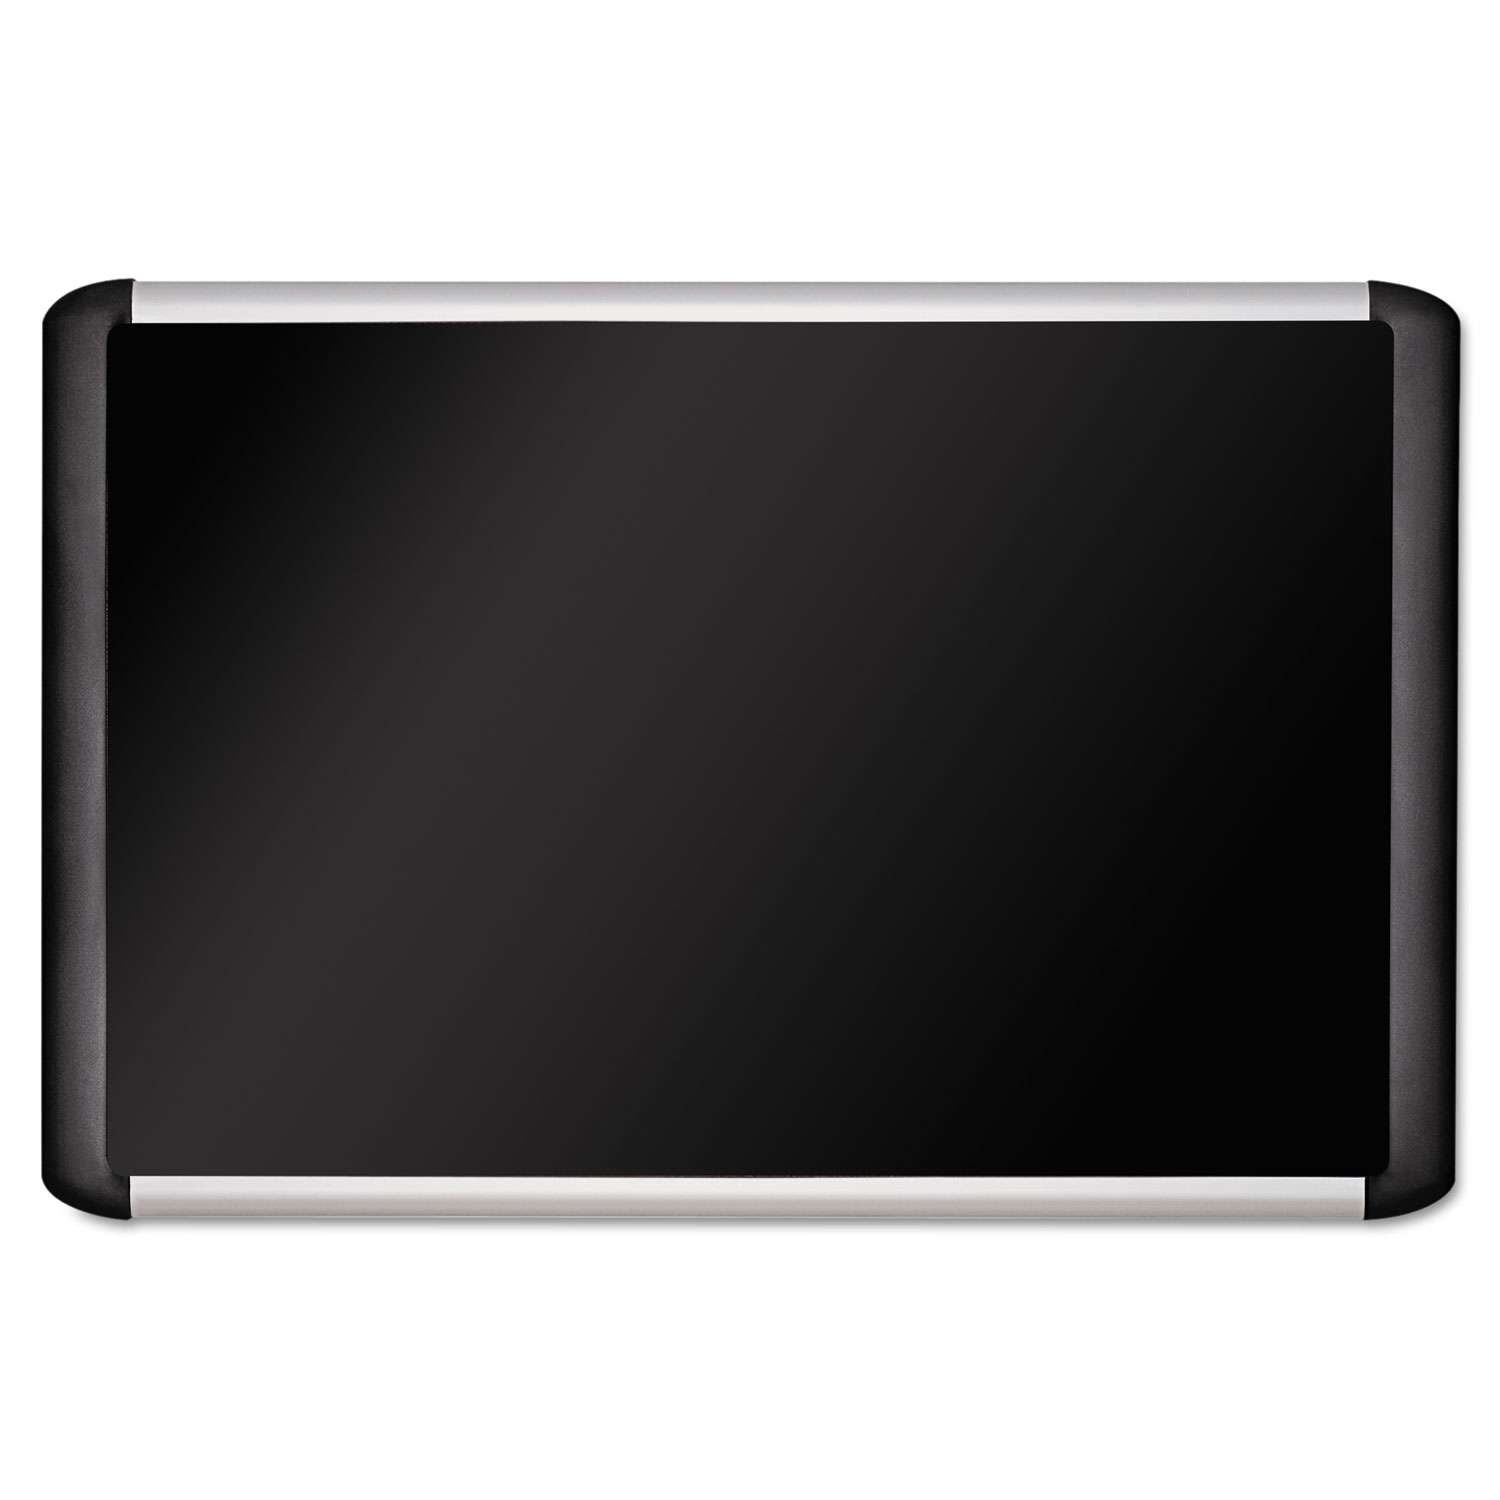  MasterVision MVI210301 Black fabric bulletin board, 48 x 96, Silver/Black (BVCMVI210301) 